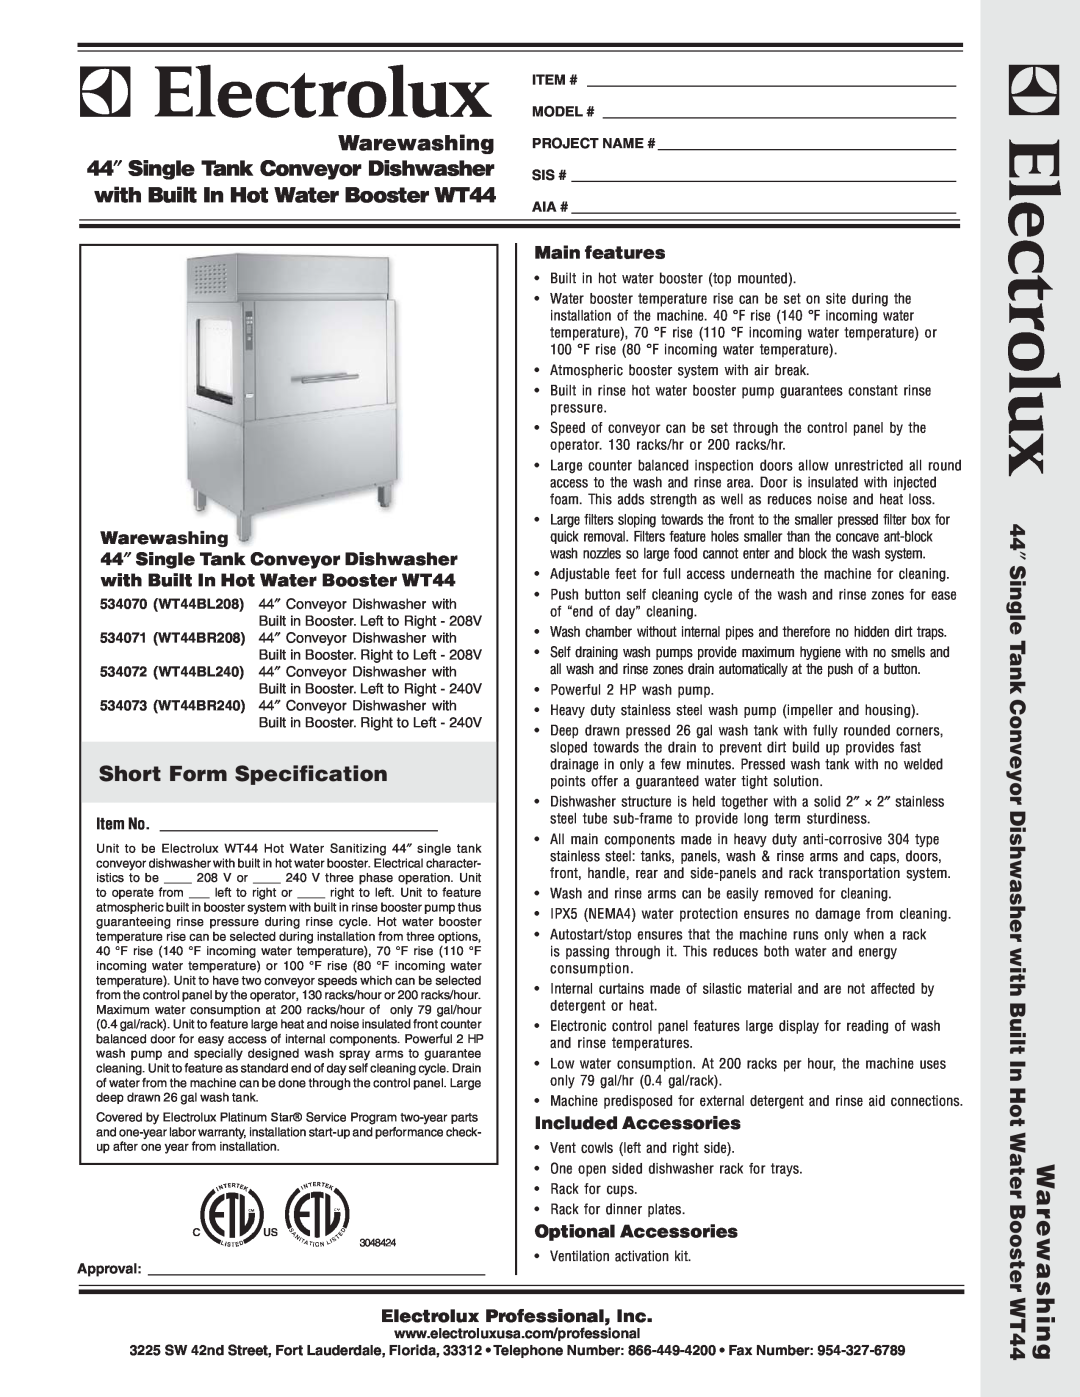 Electrolux warranty Warewashing, 44″ Single Tank Conveyor Dishwasher, with Built In Hot Water Booster WT44, Item # 